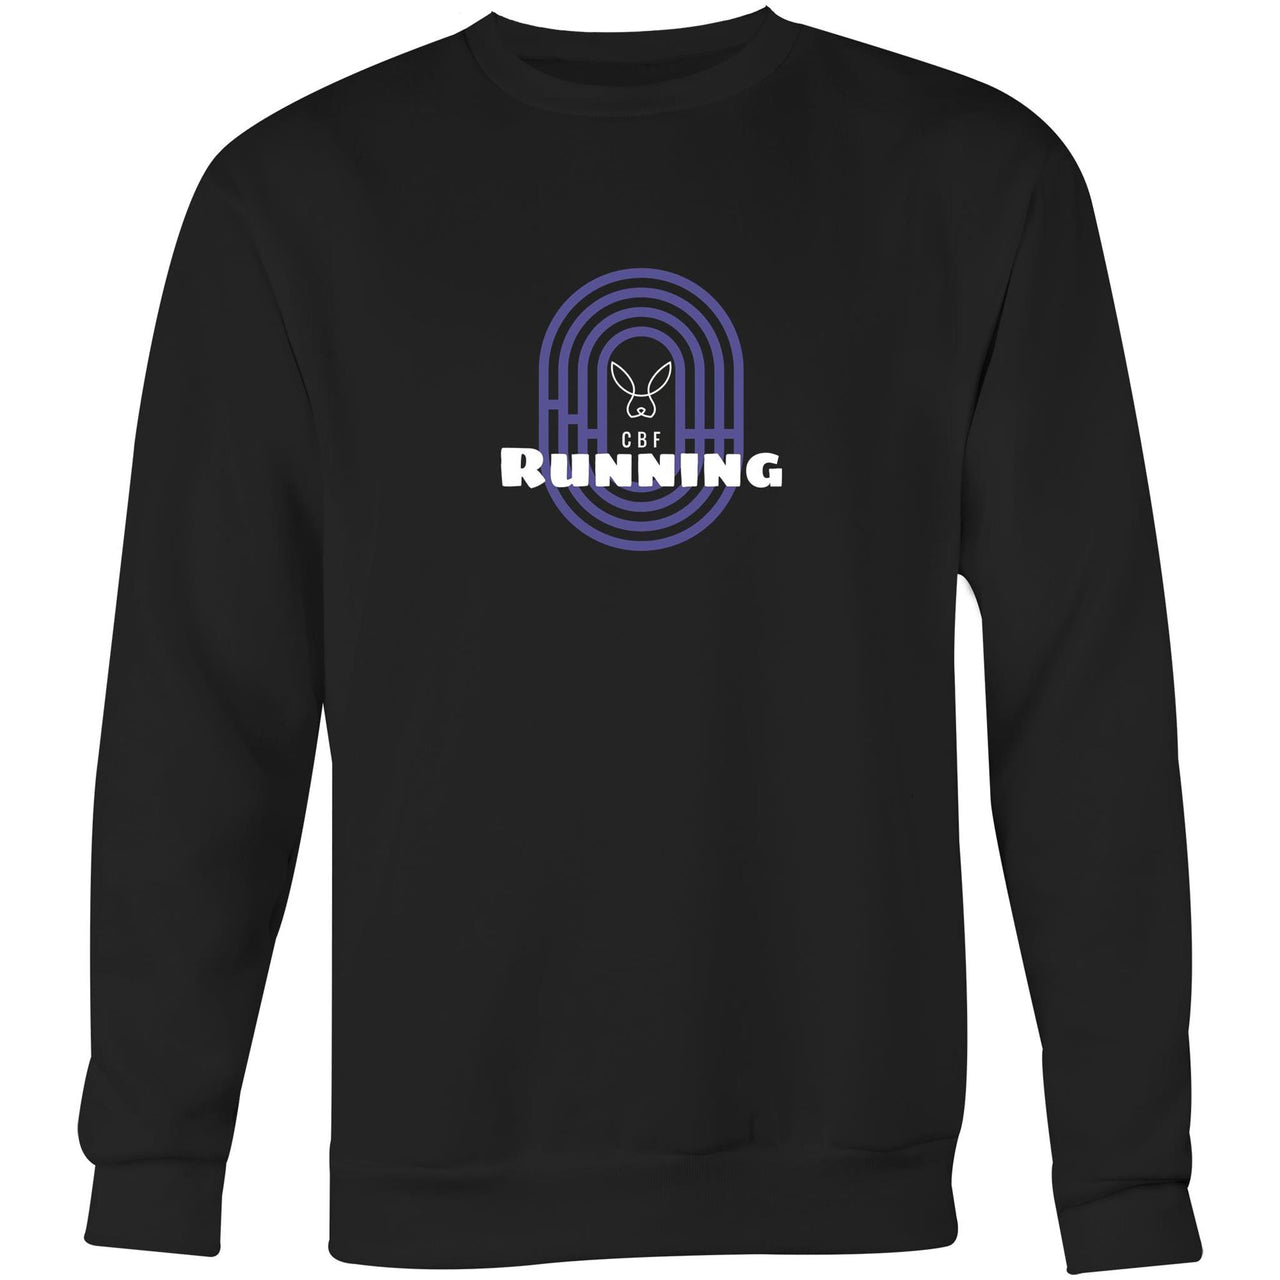 CBF Running Crew Sweatshirt Black by CBF Clothing